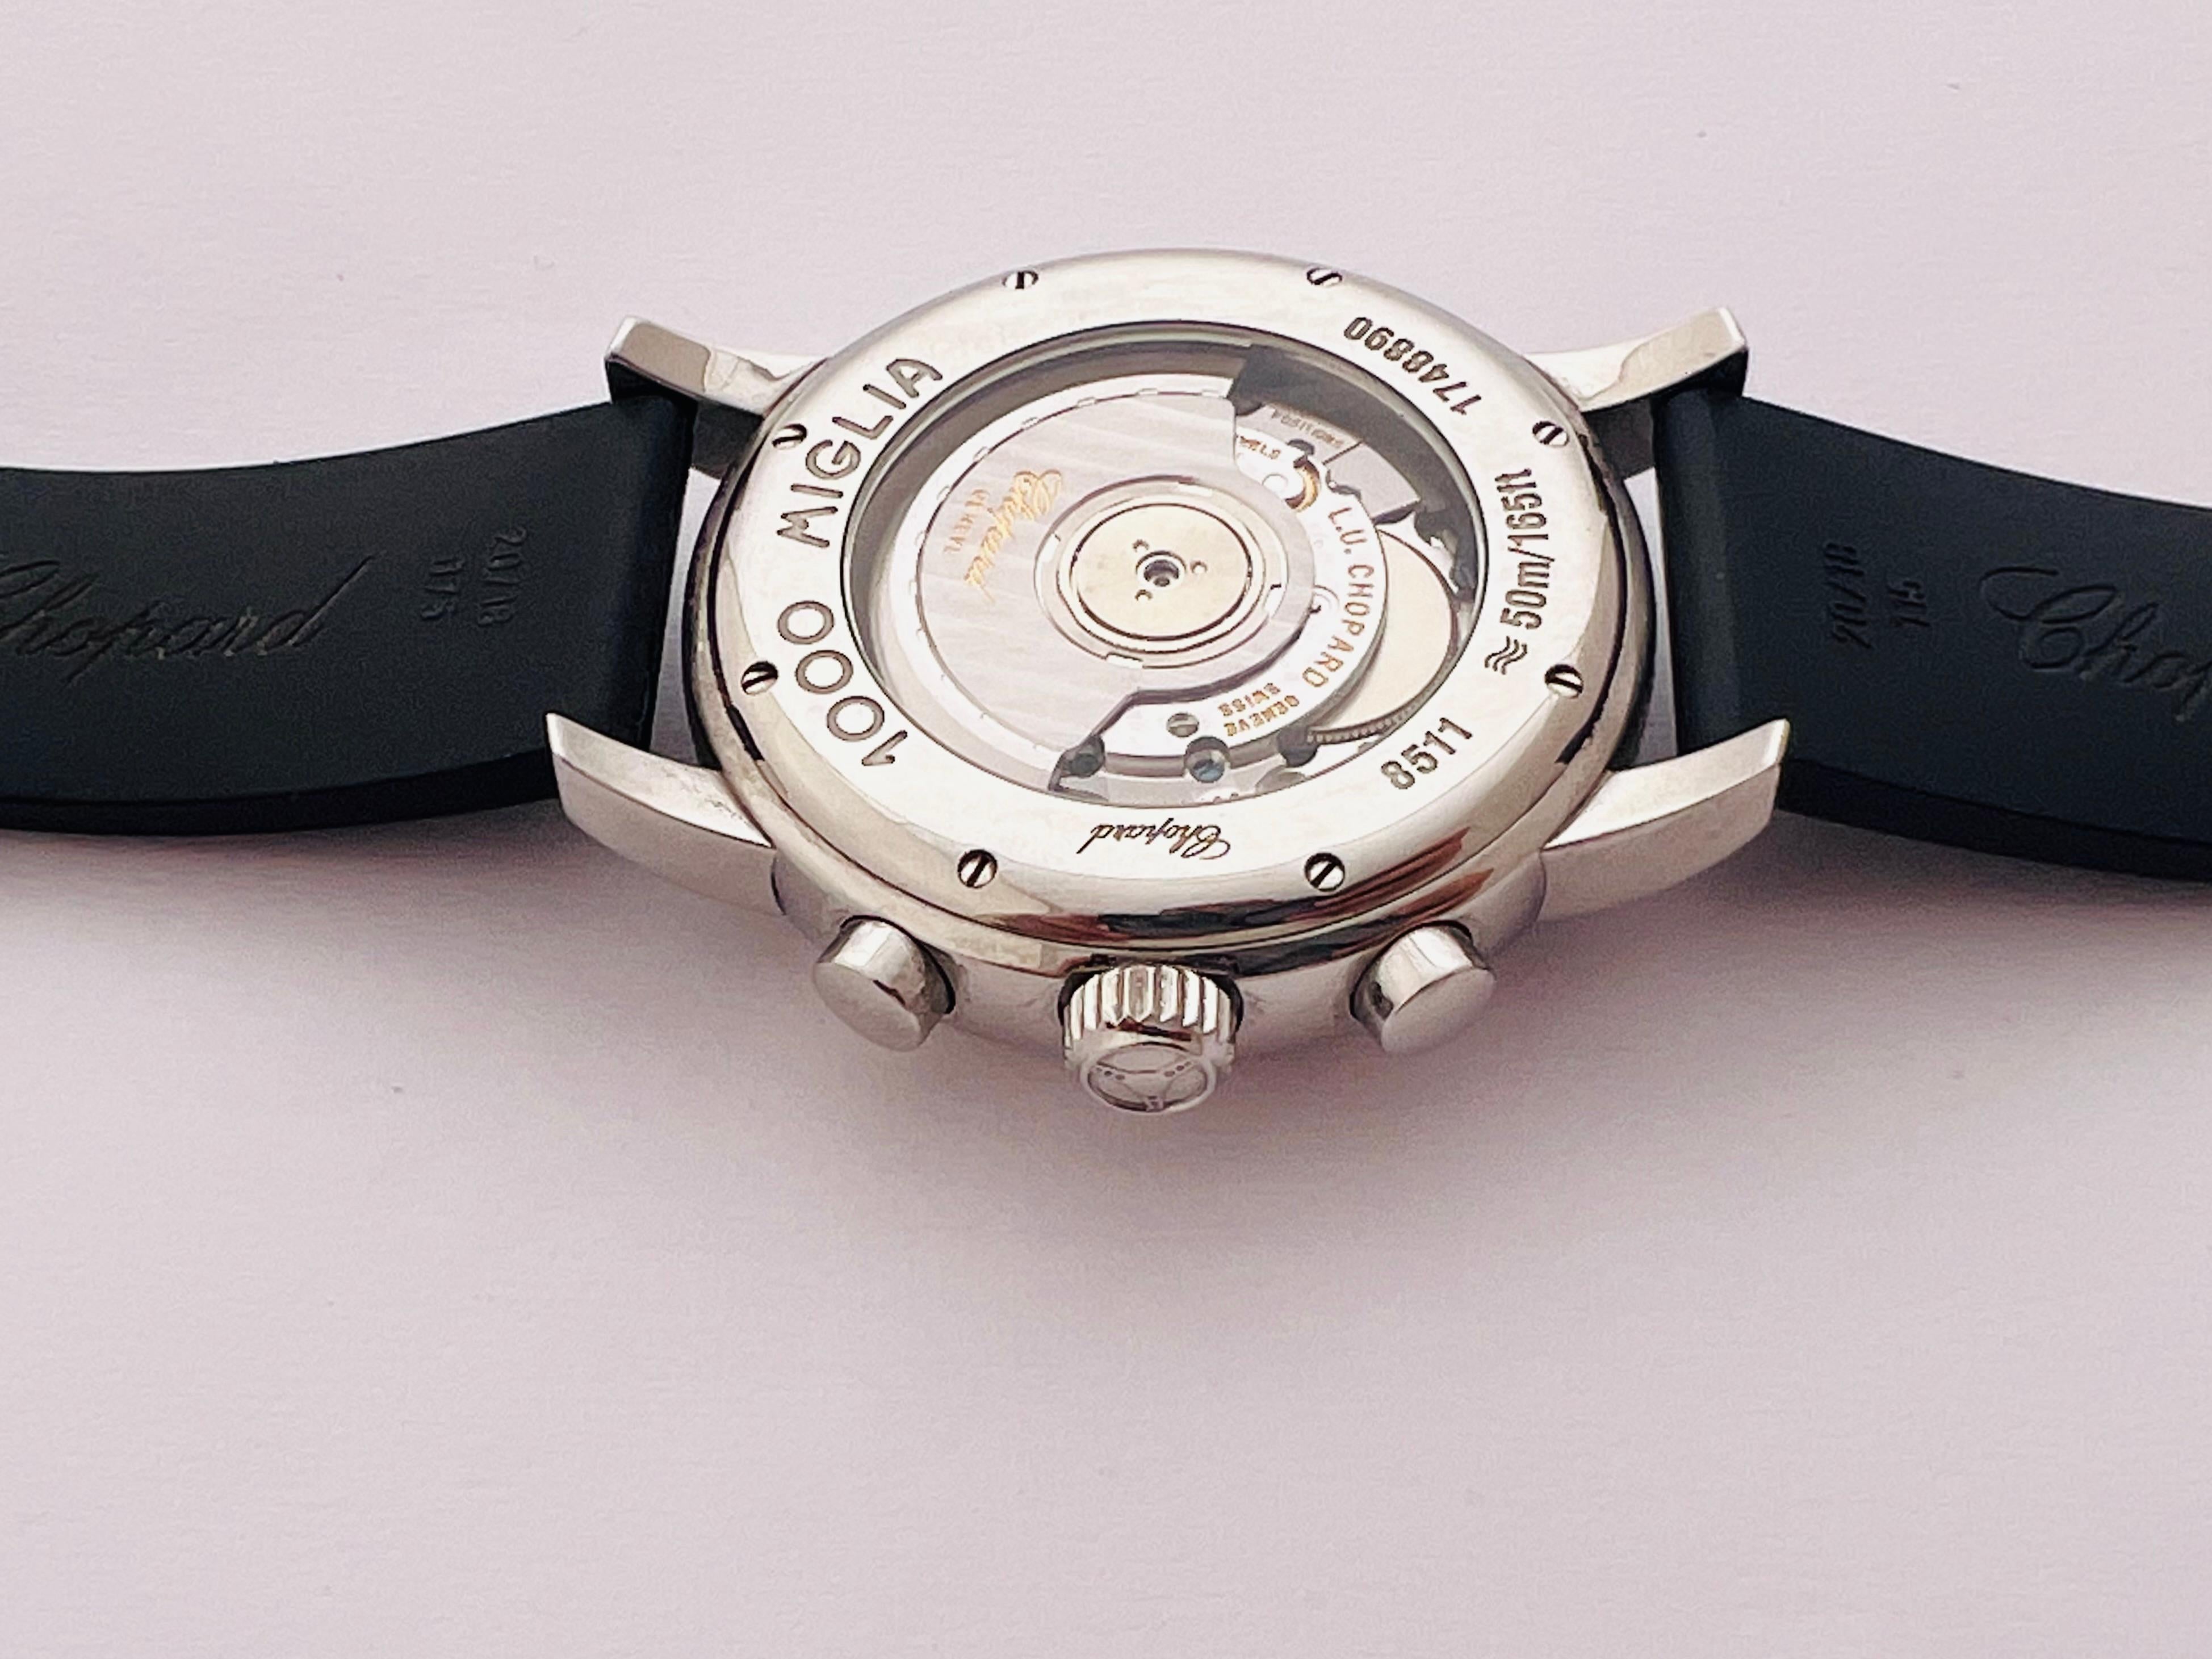 Men's Chopard Mille Miglia 8511 Chronograph Limited Edition 1000 Miglia Watch